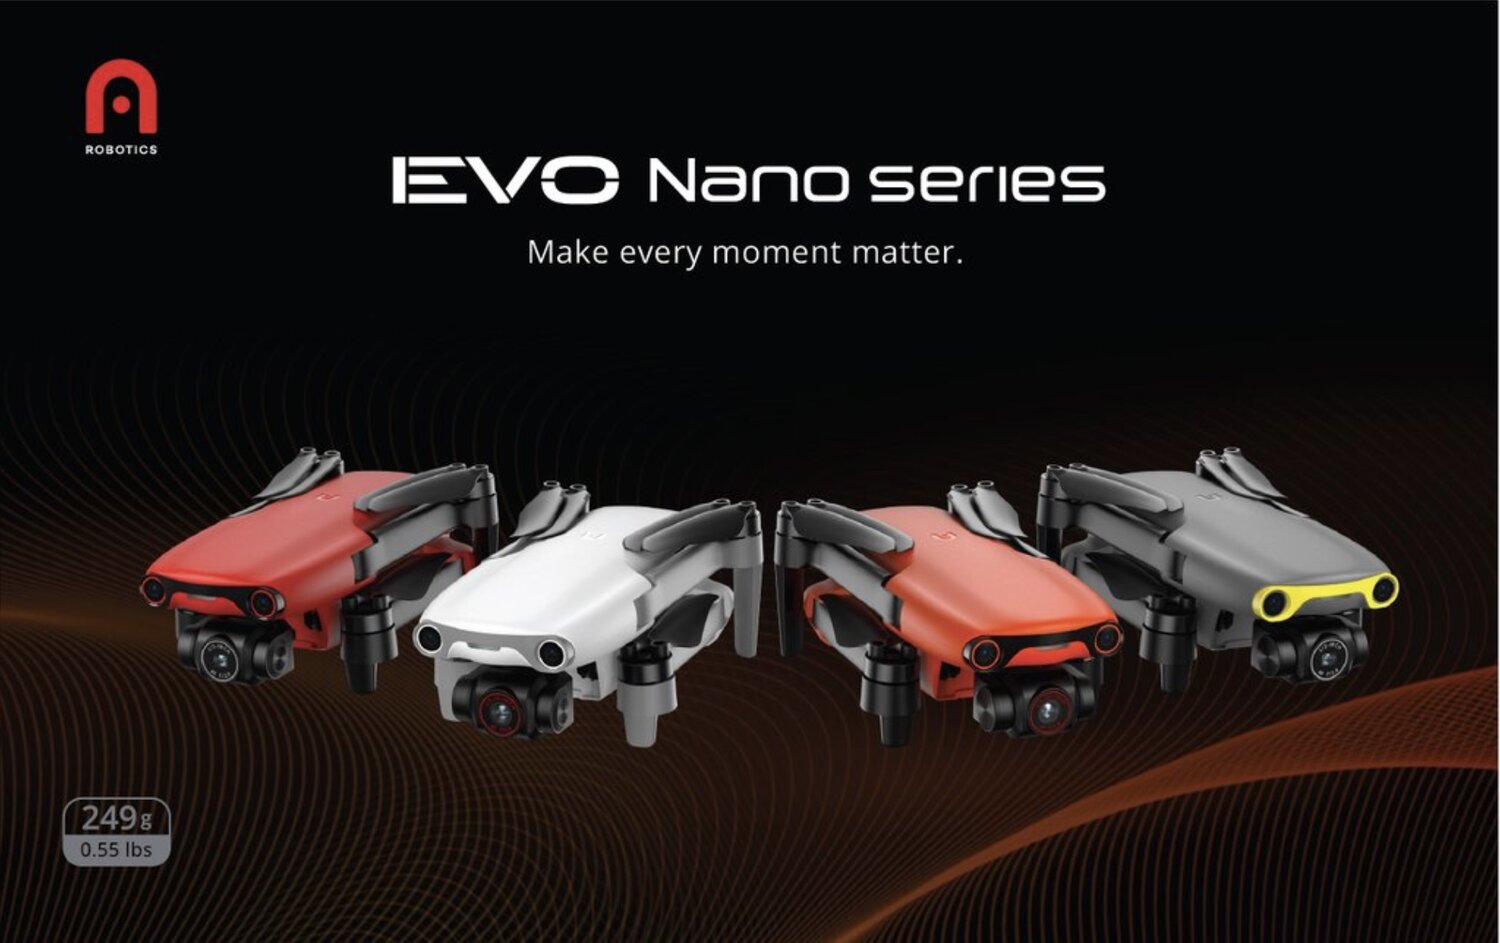 Autel Robotics has announced their new Nano series of foldable drones.